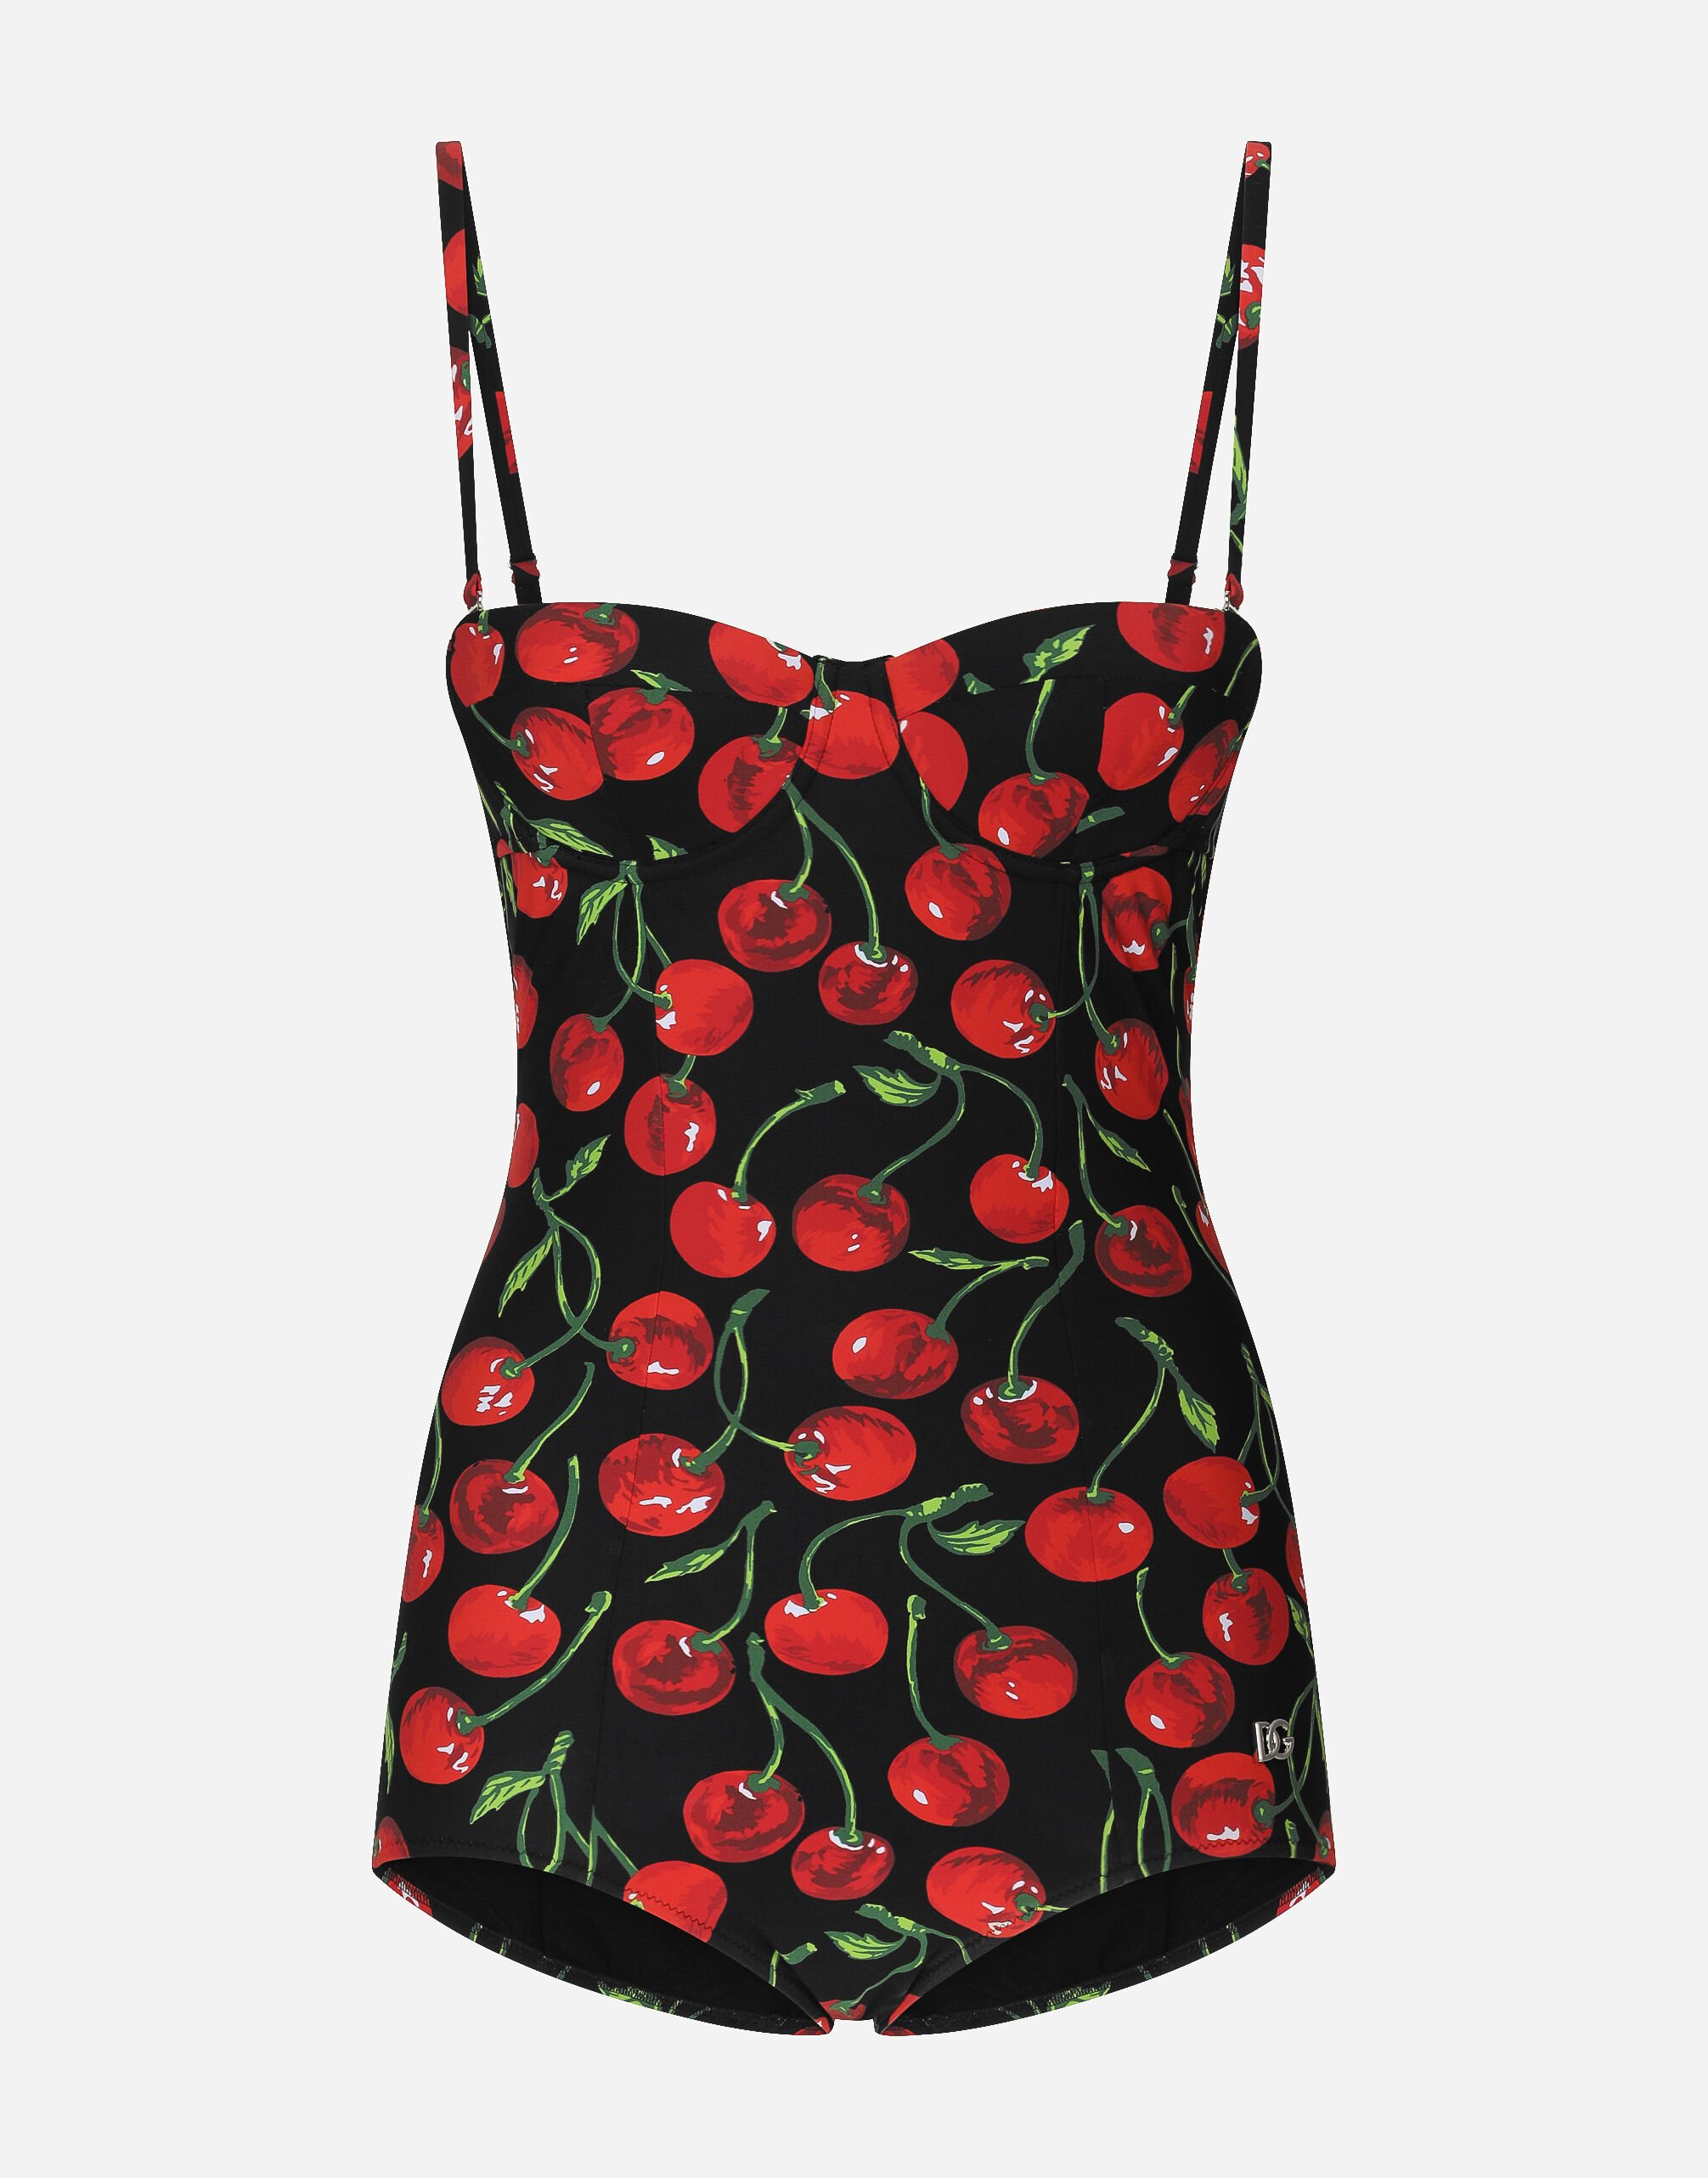 Dolce & Gabbana Cherry-print balconette one-piece swimsuit Print O9B40JFSG1S